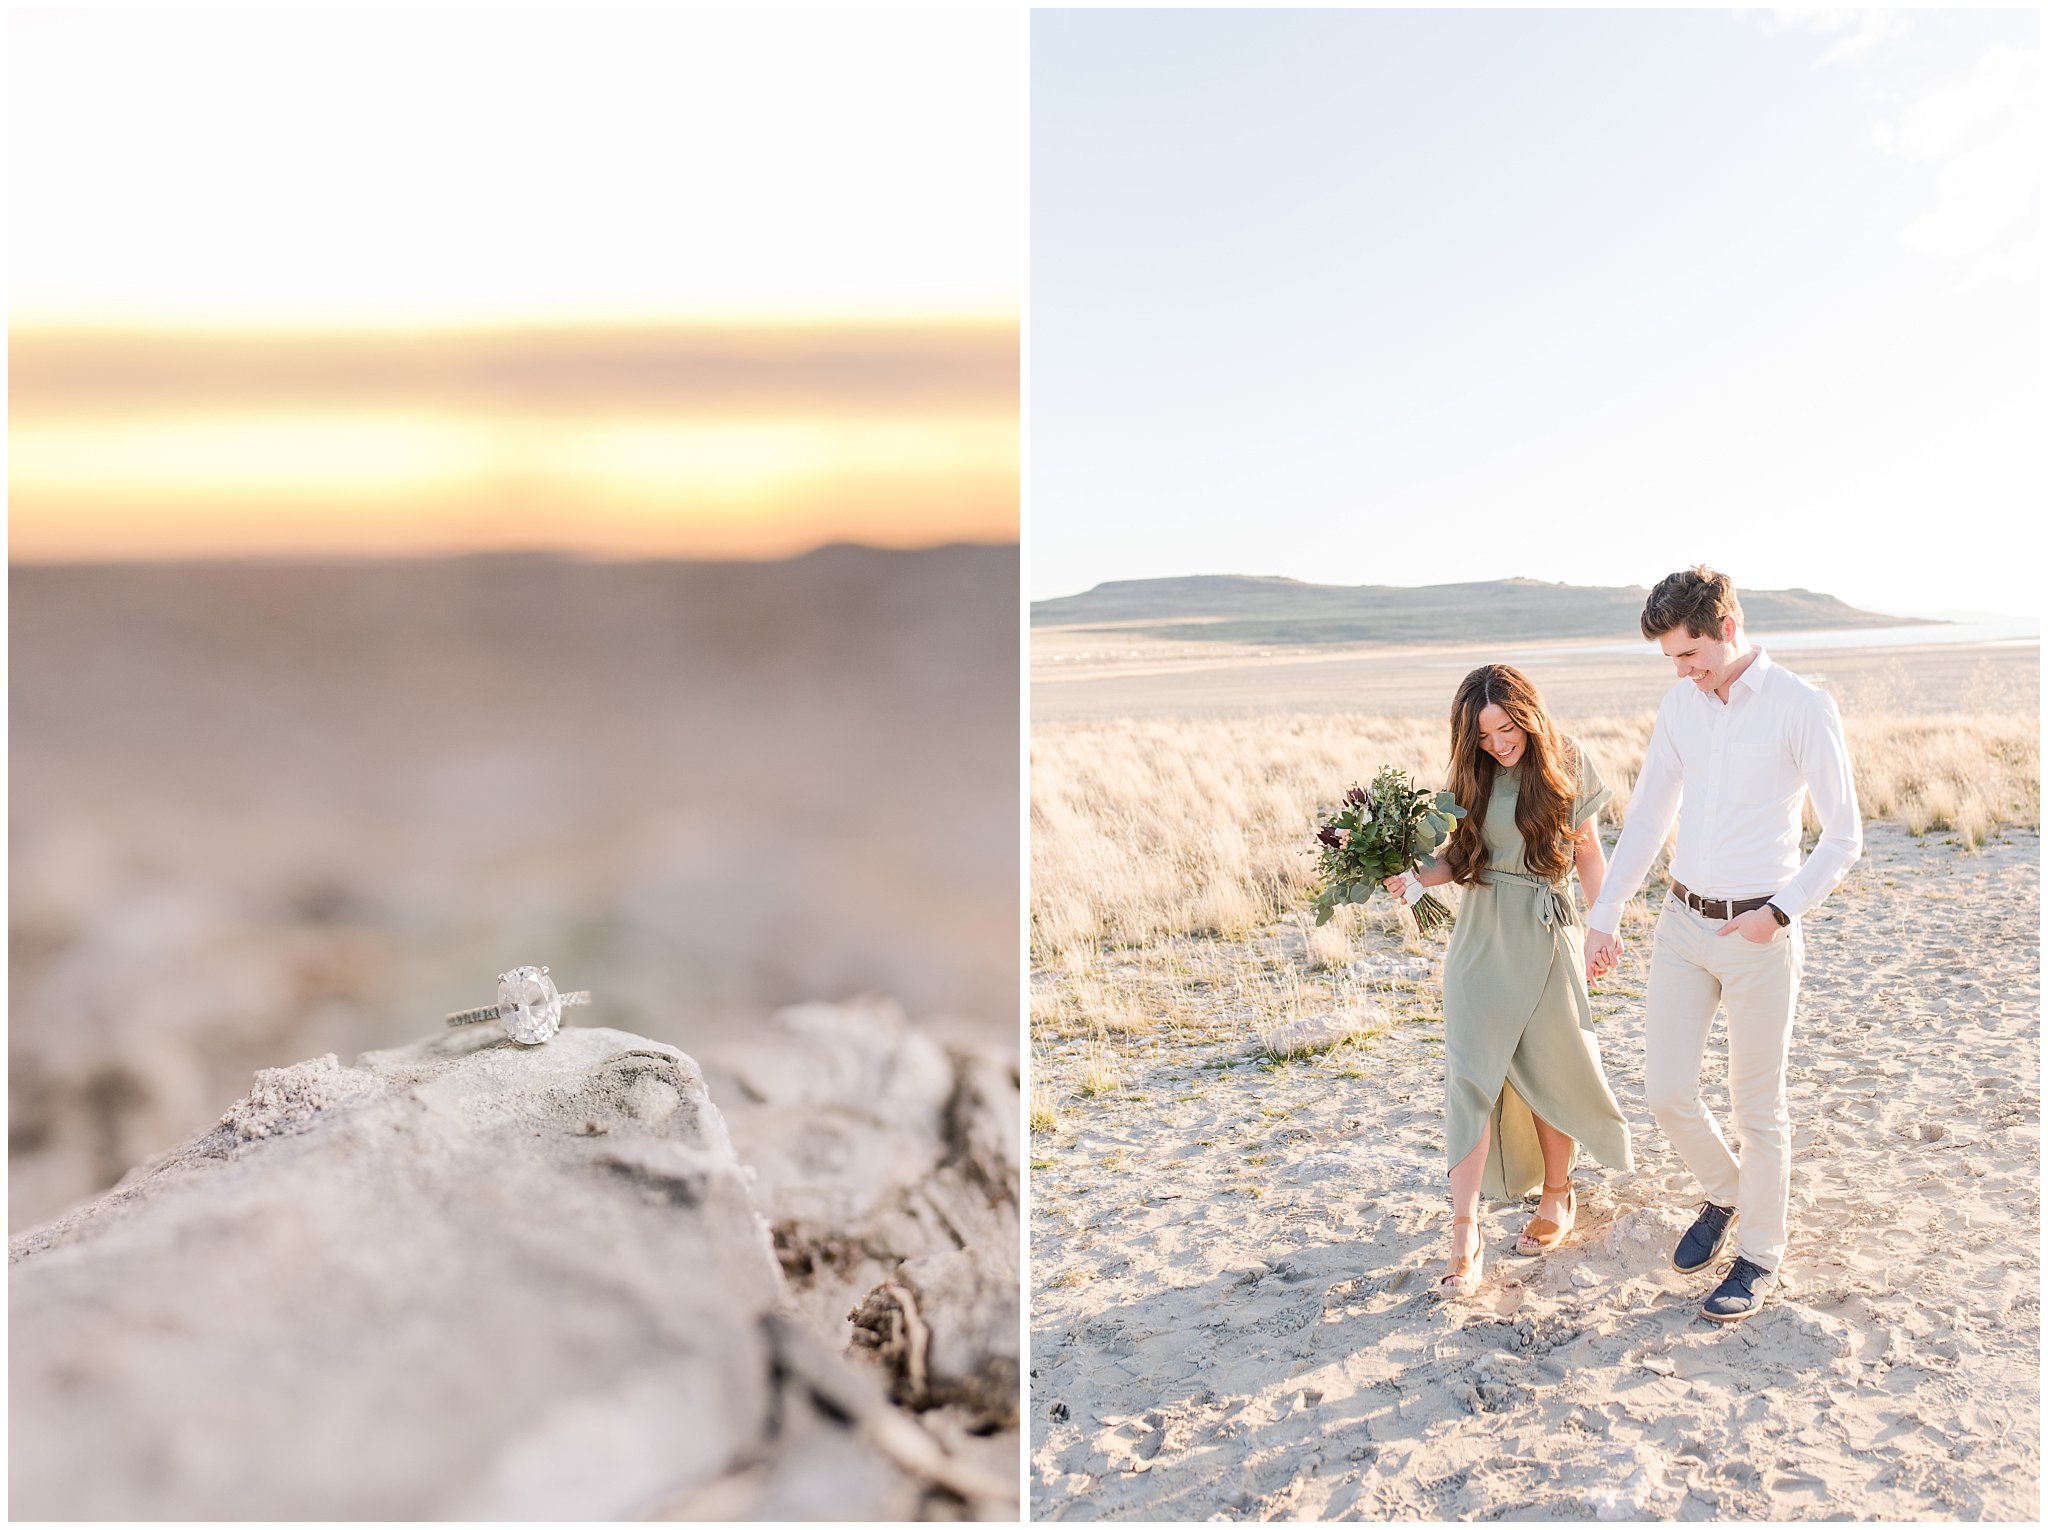 Couple walking on Antelope Island beach | Antelope Island Engagements | Utah Wedding Photographers | Jessie and Dallin Photography